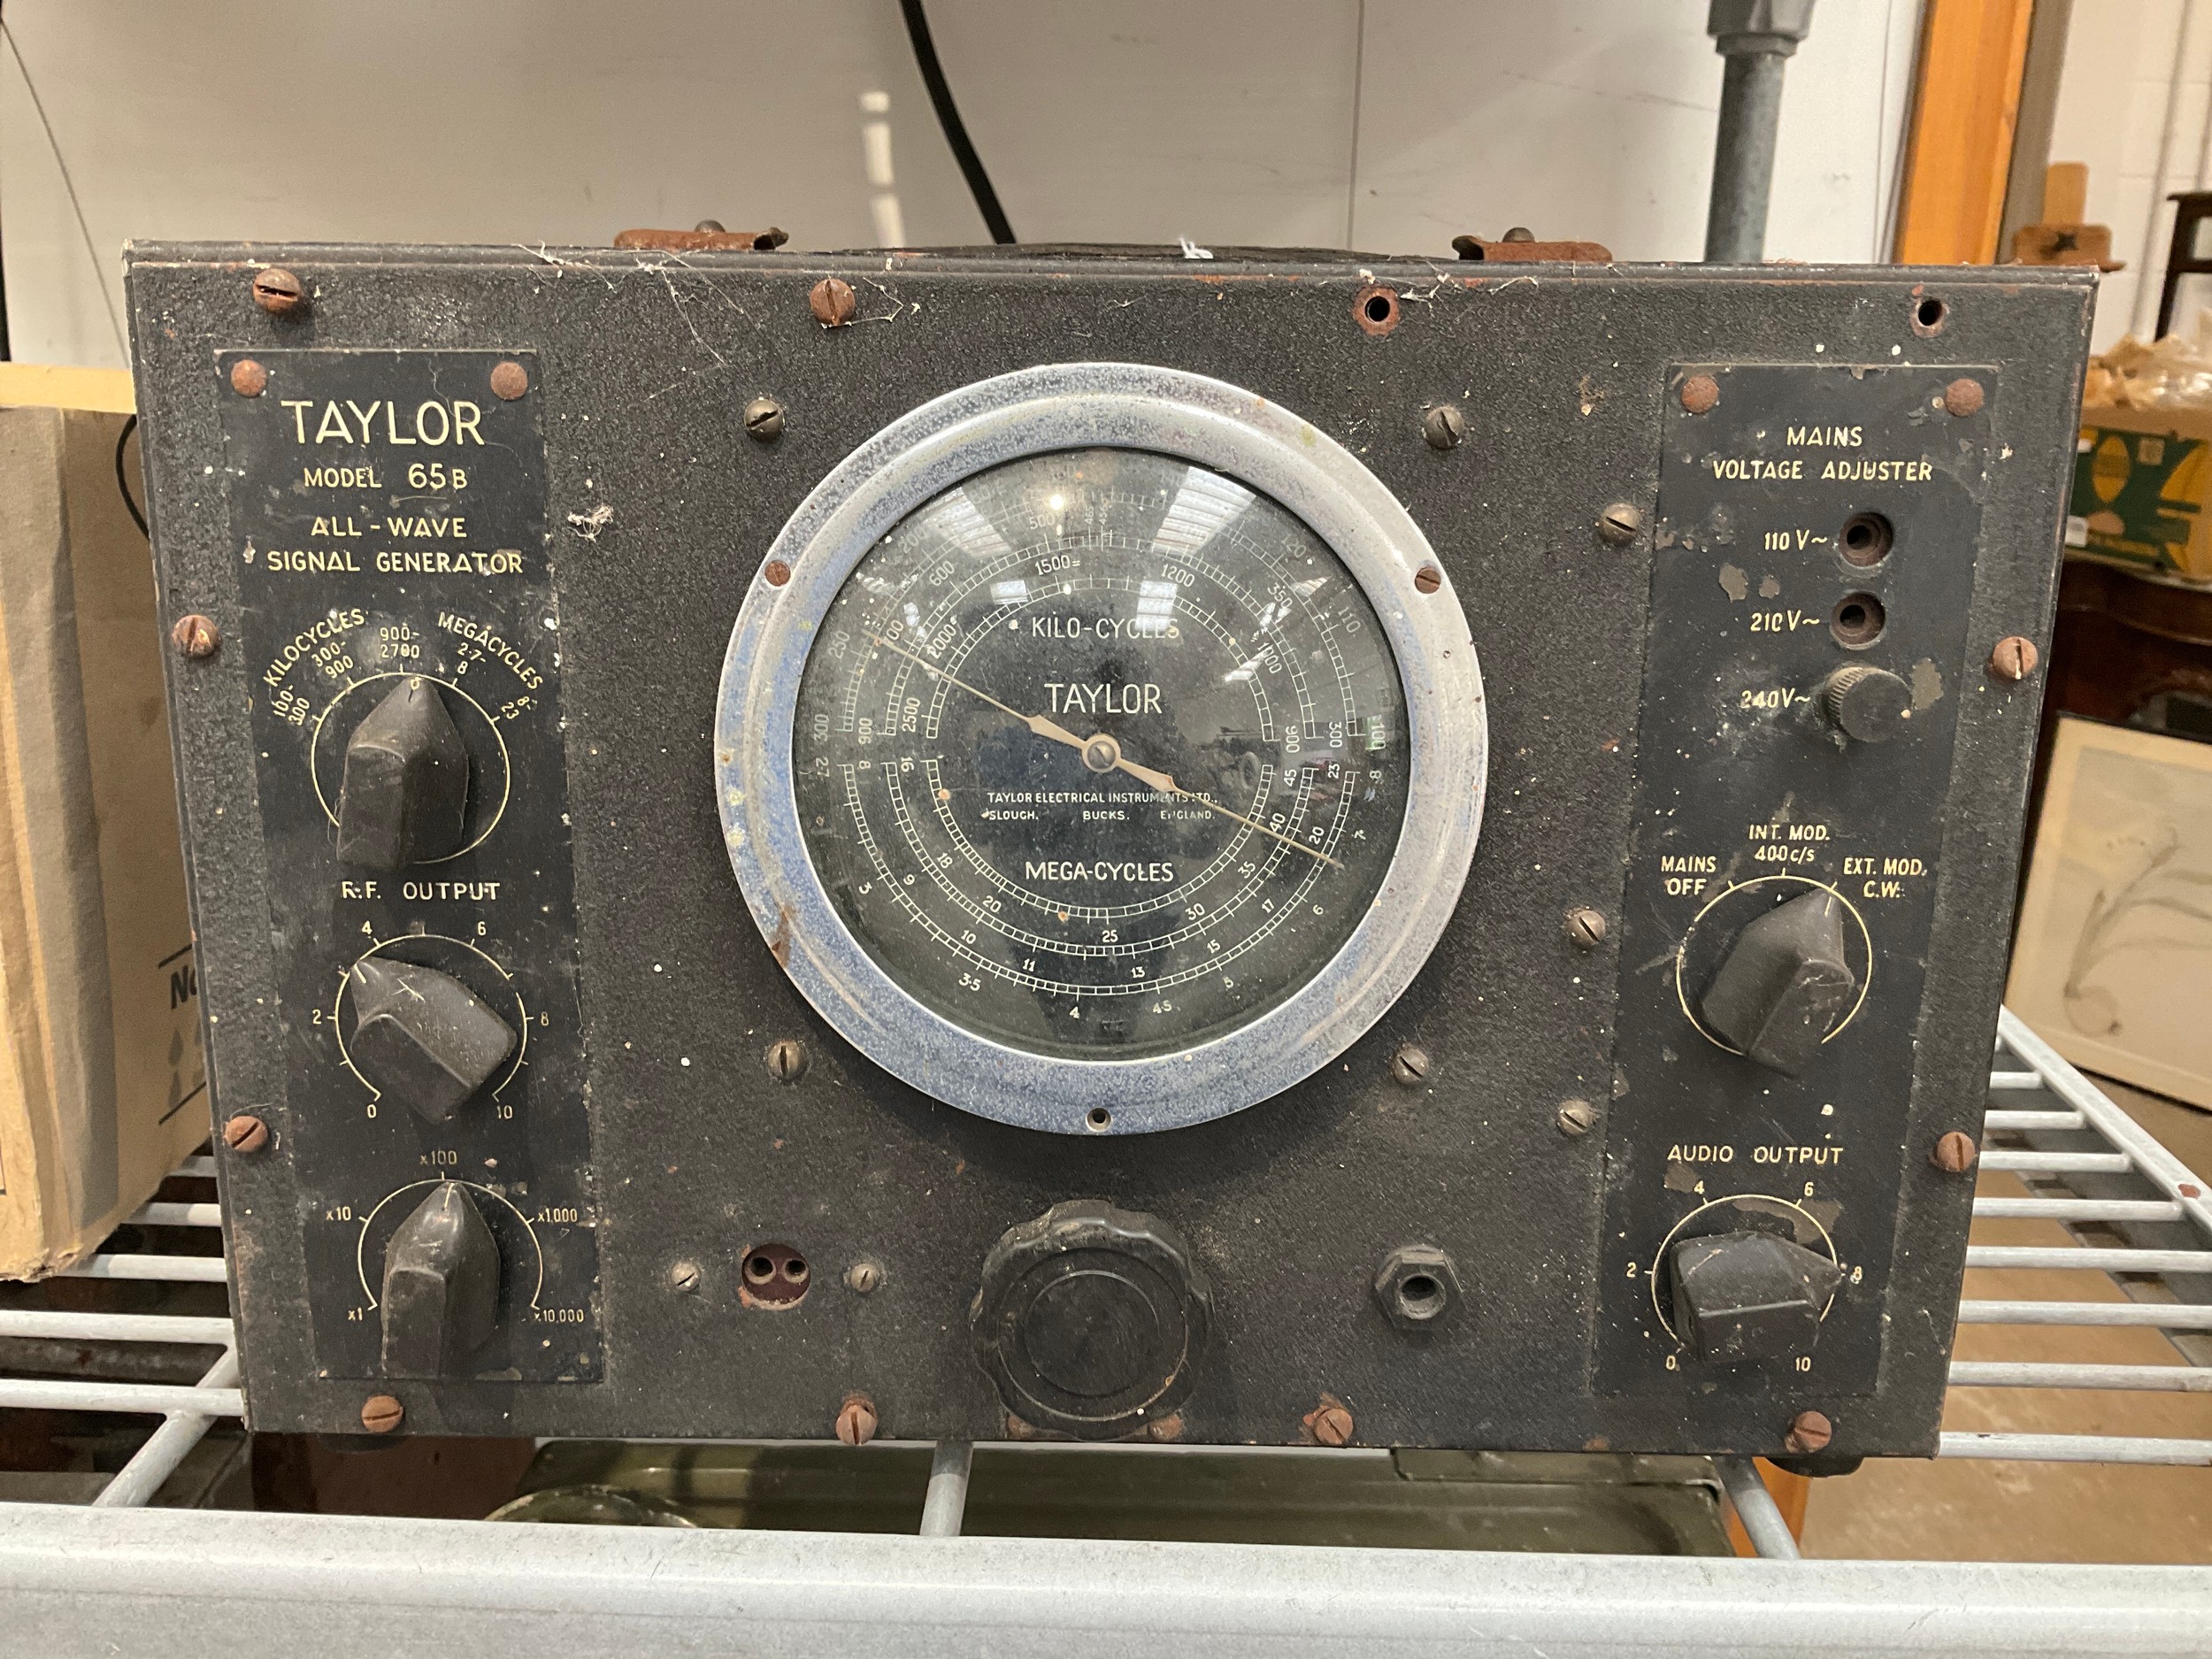 A Taylor All-Wave Signal Generator model 65B